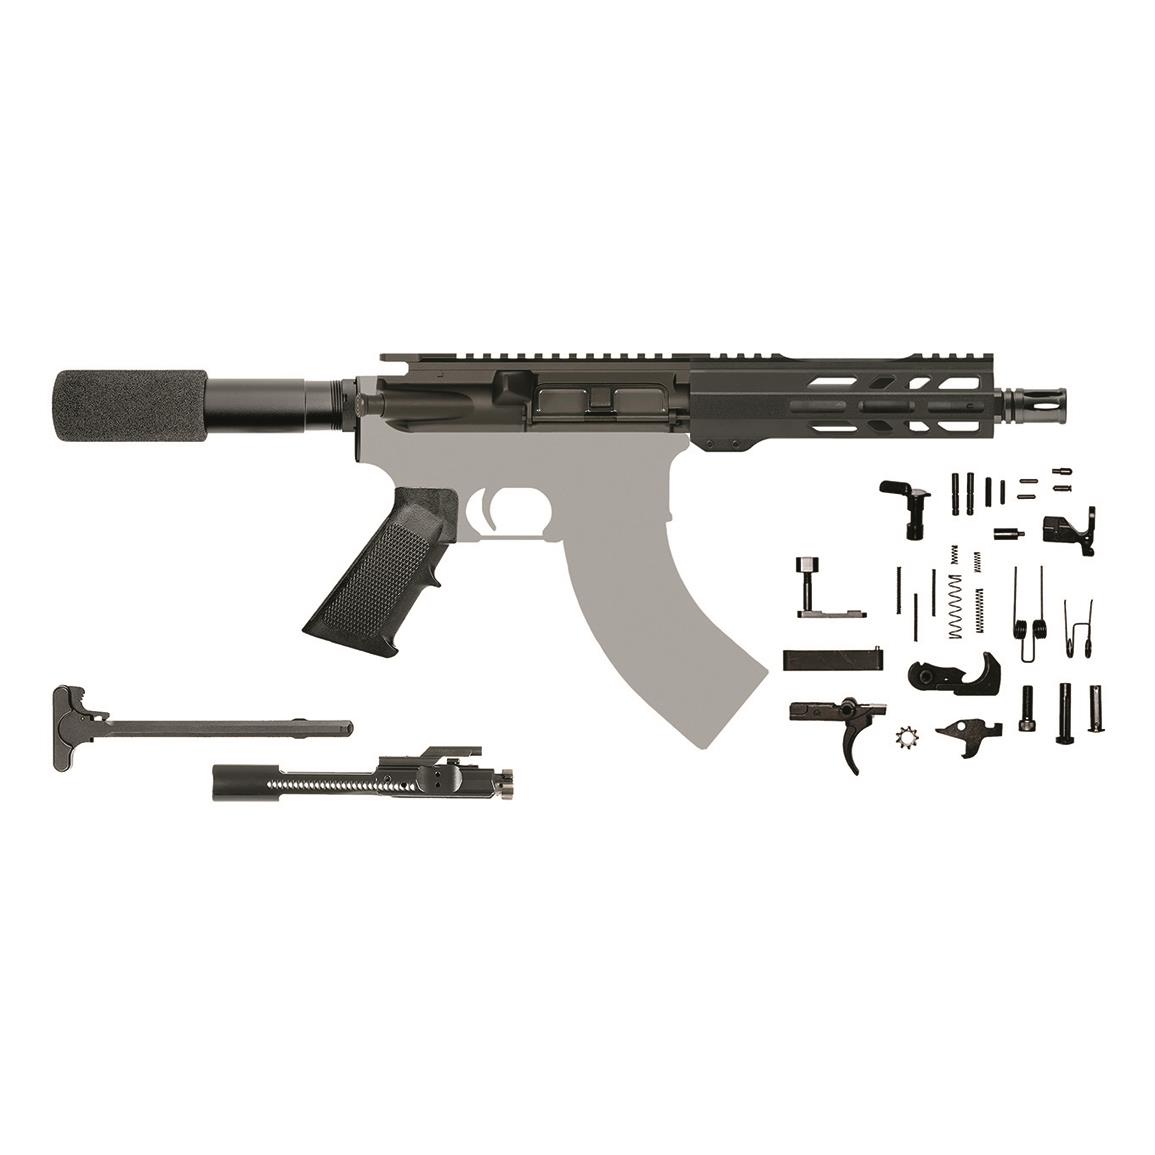 CBC AR-15 Pistol Kit, Semi-auto, 7.62x39mm, 7.5" Barrel, No Stripped Lower or Magazine